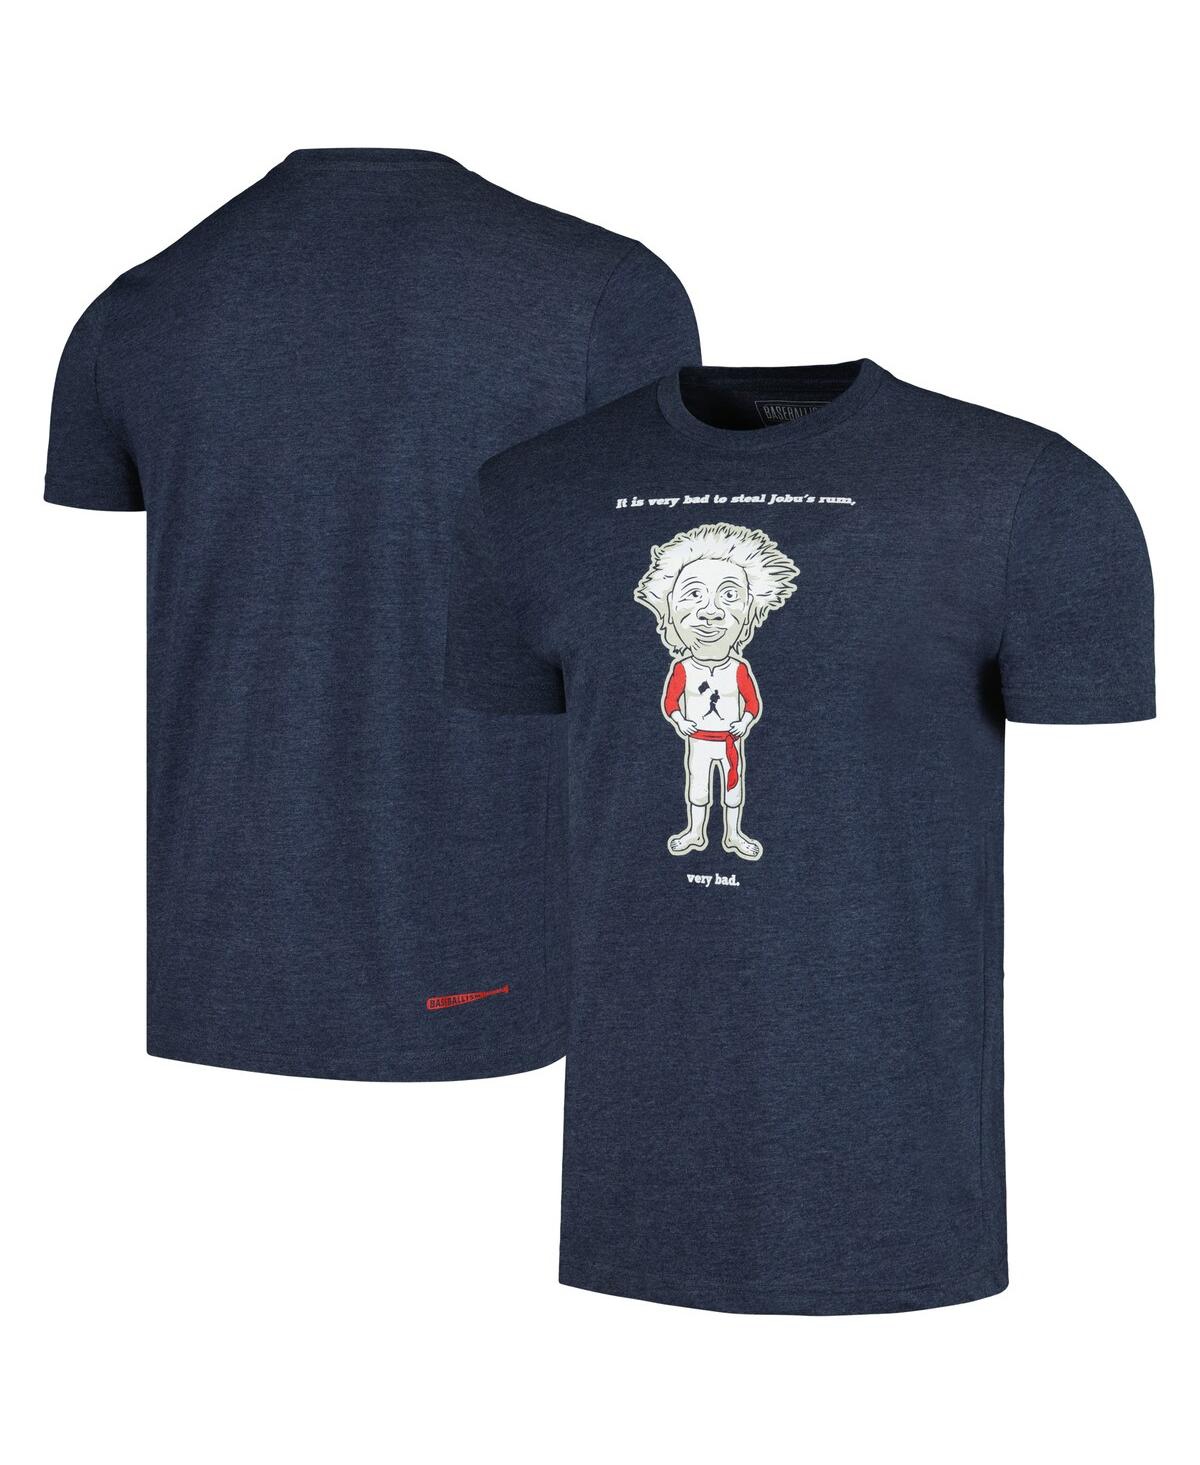 Jobu's Rum Major League Shirt: Major League Mens T-Shirt